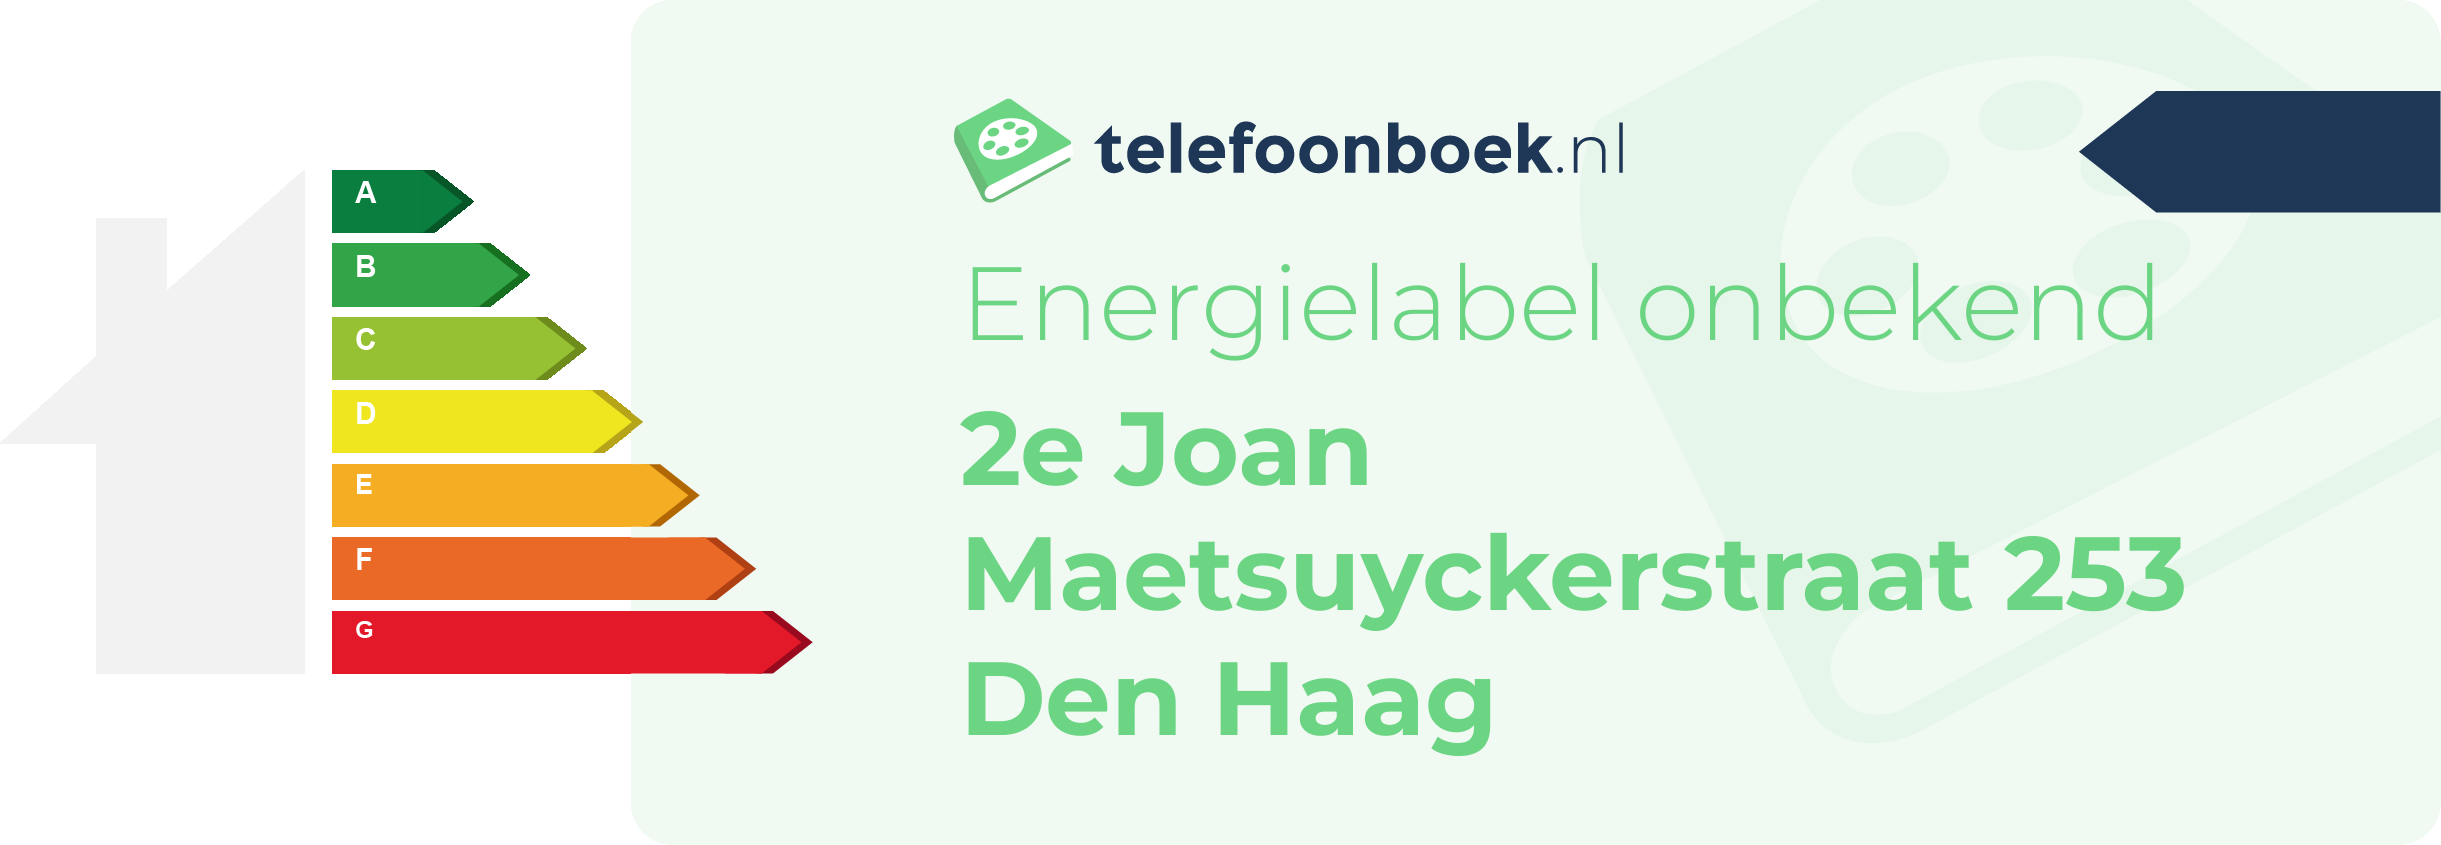 Energielabel 2e Joan Maetsuyckerstraat 253 Den Haag